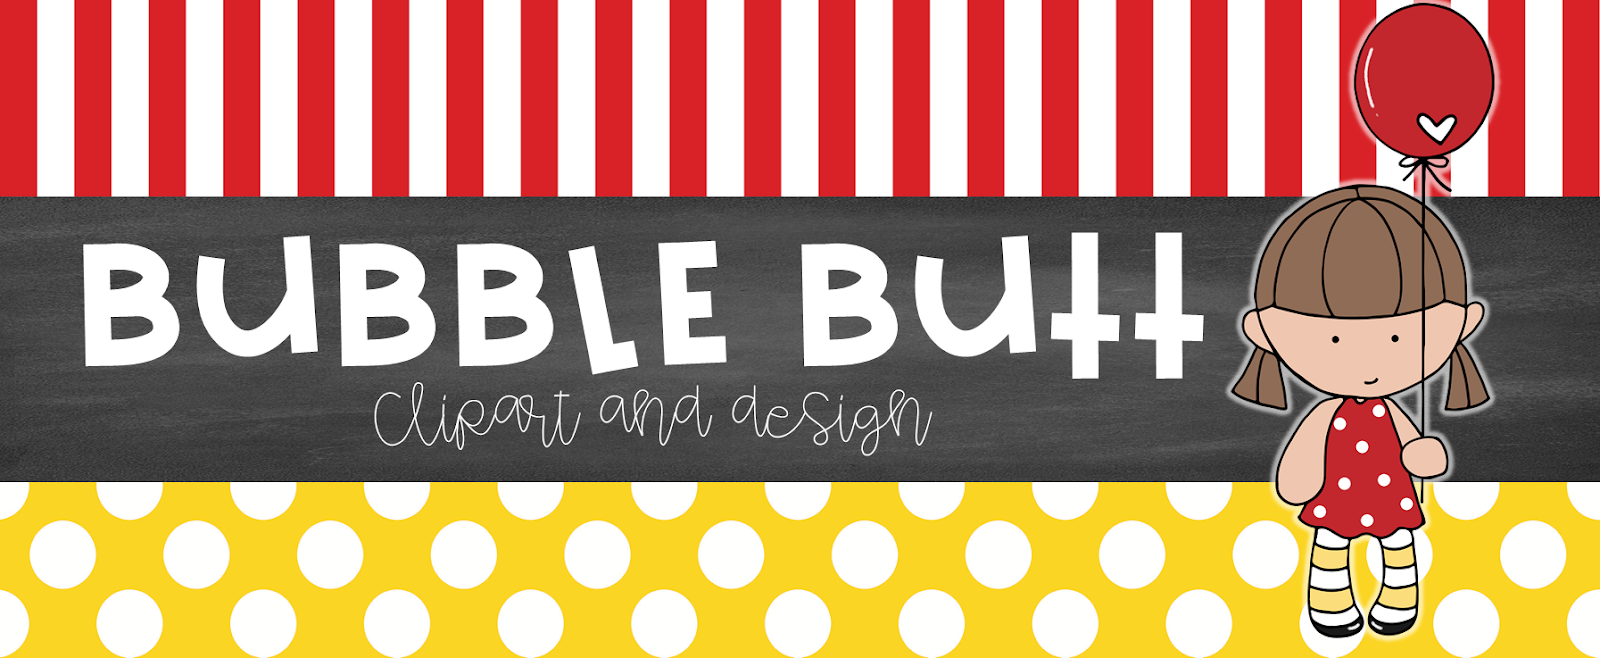 Bubble Butt clipart and design